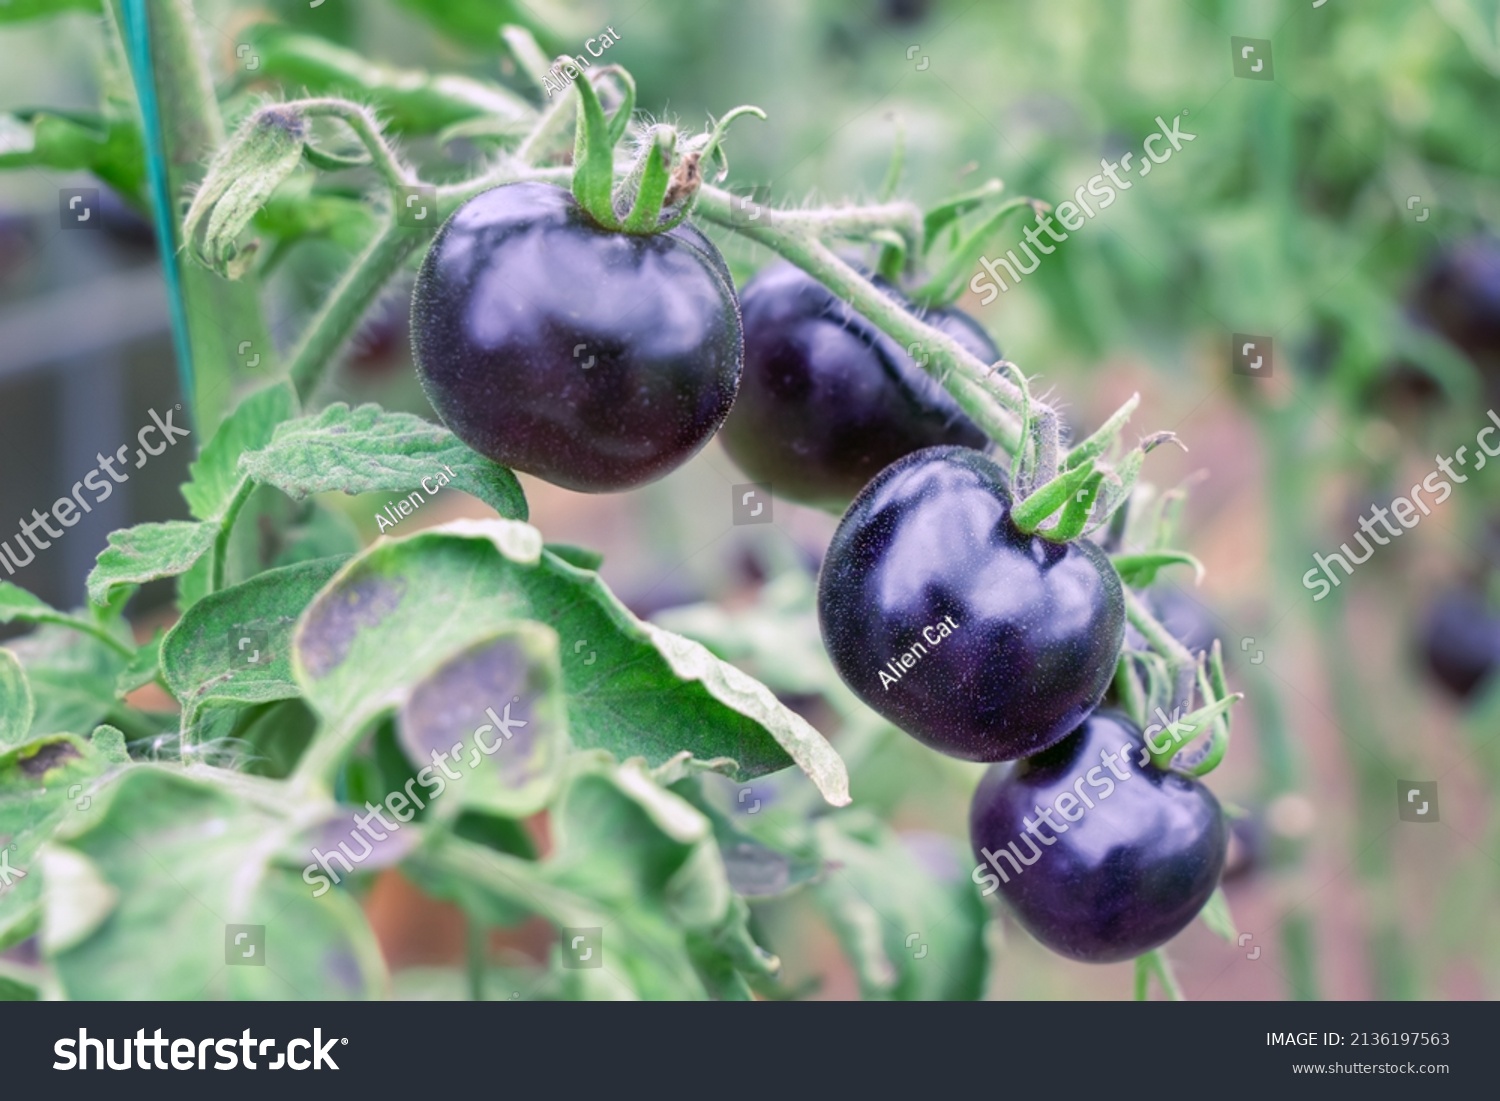 Black tomatoes grow on branch in vegetable garden. Indigo rose - blackest tomato variety harvest in farm greenhouse #2136197563